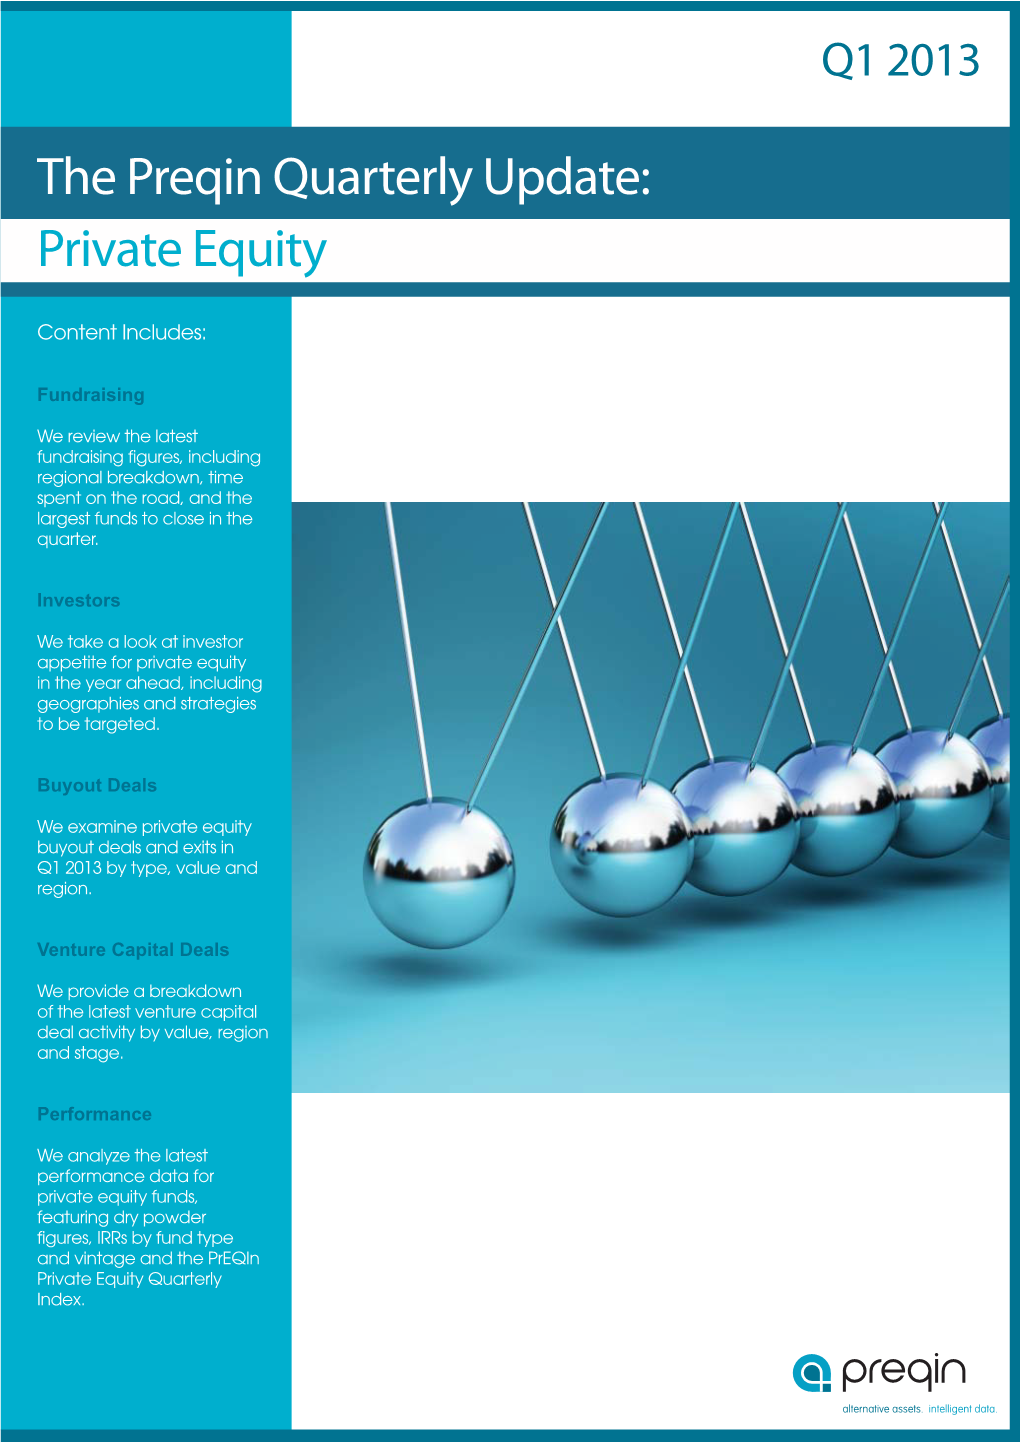 The Preqin Quarterly Update: Private Equity